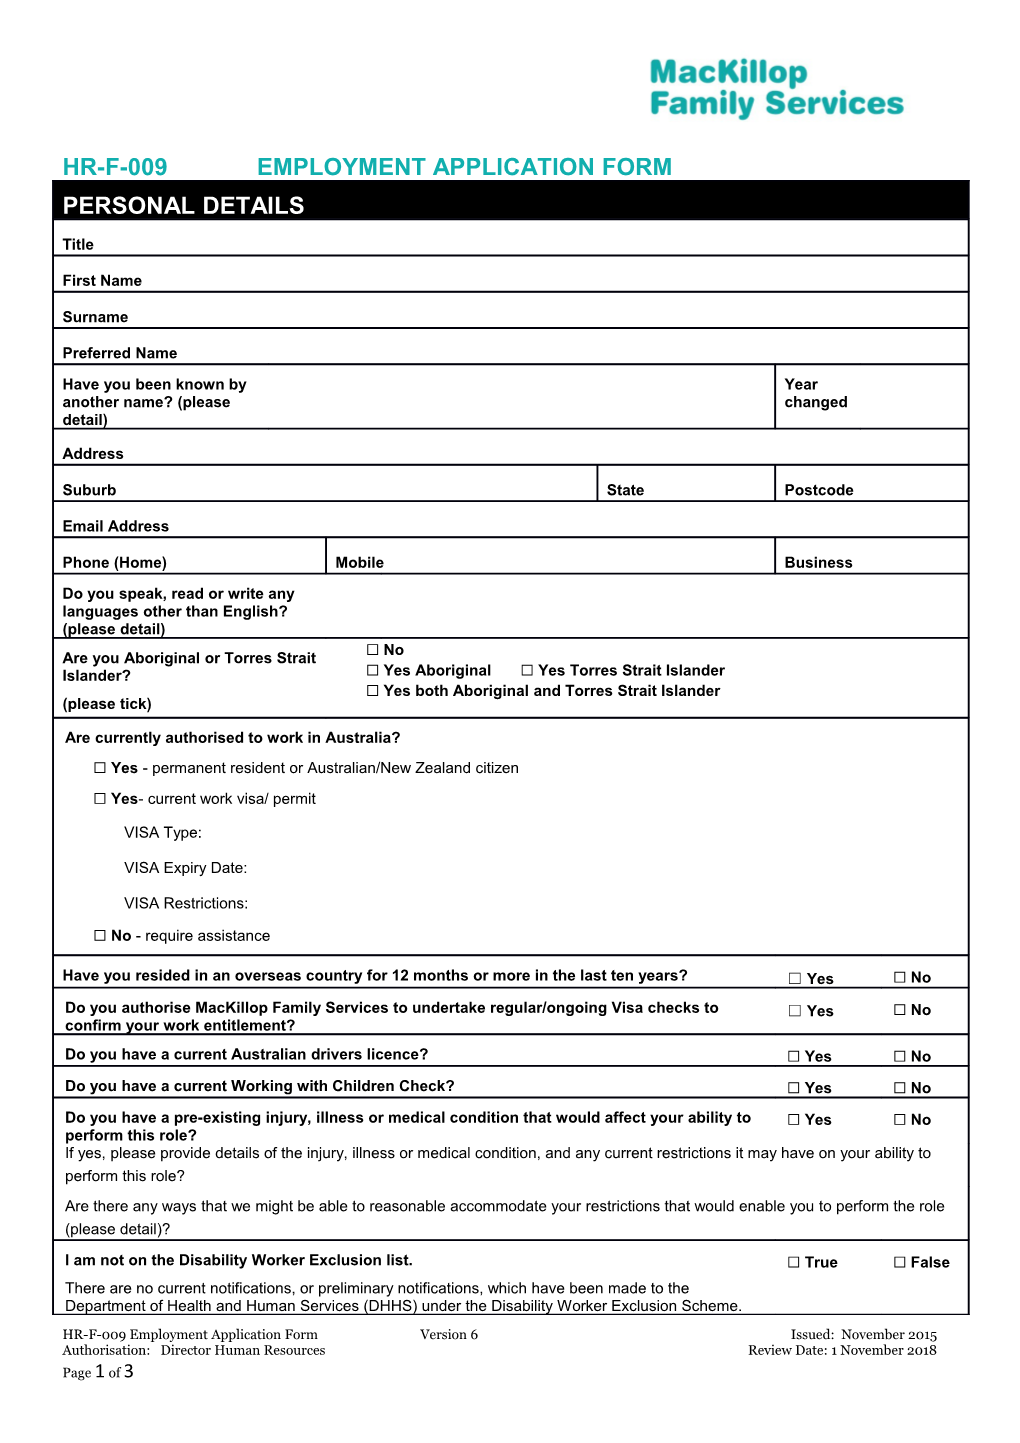 HR-F-009 Mackillop Employment Application Form